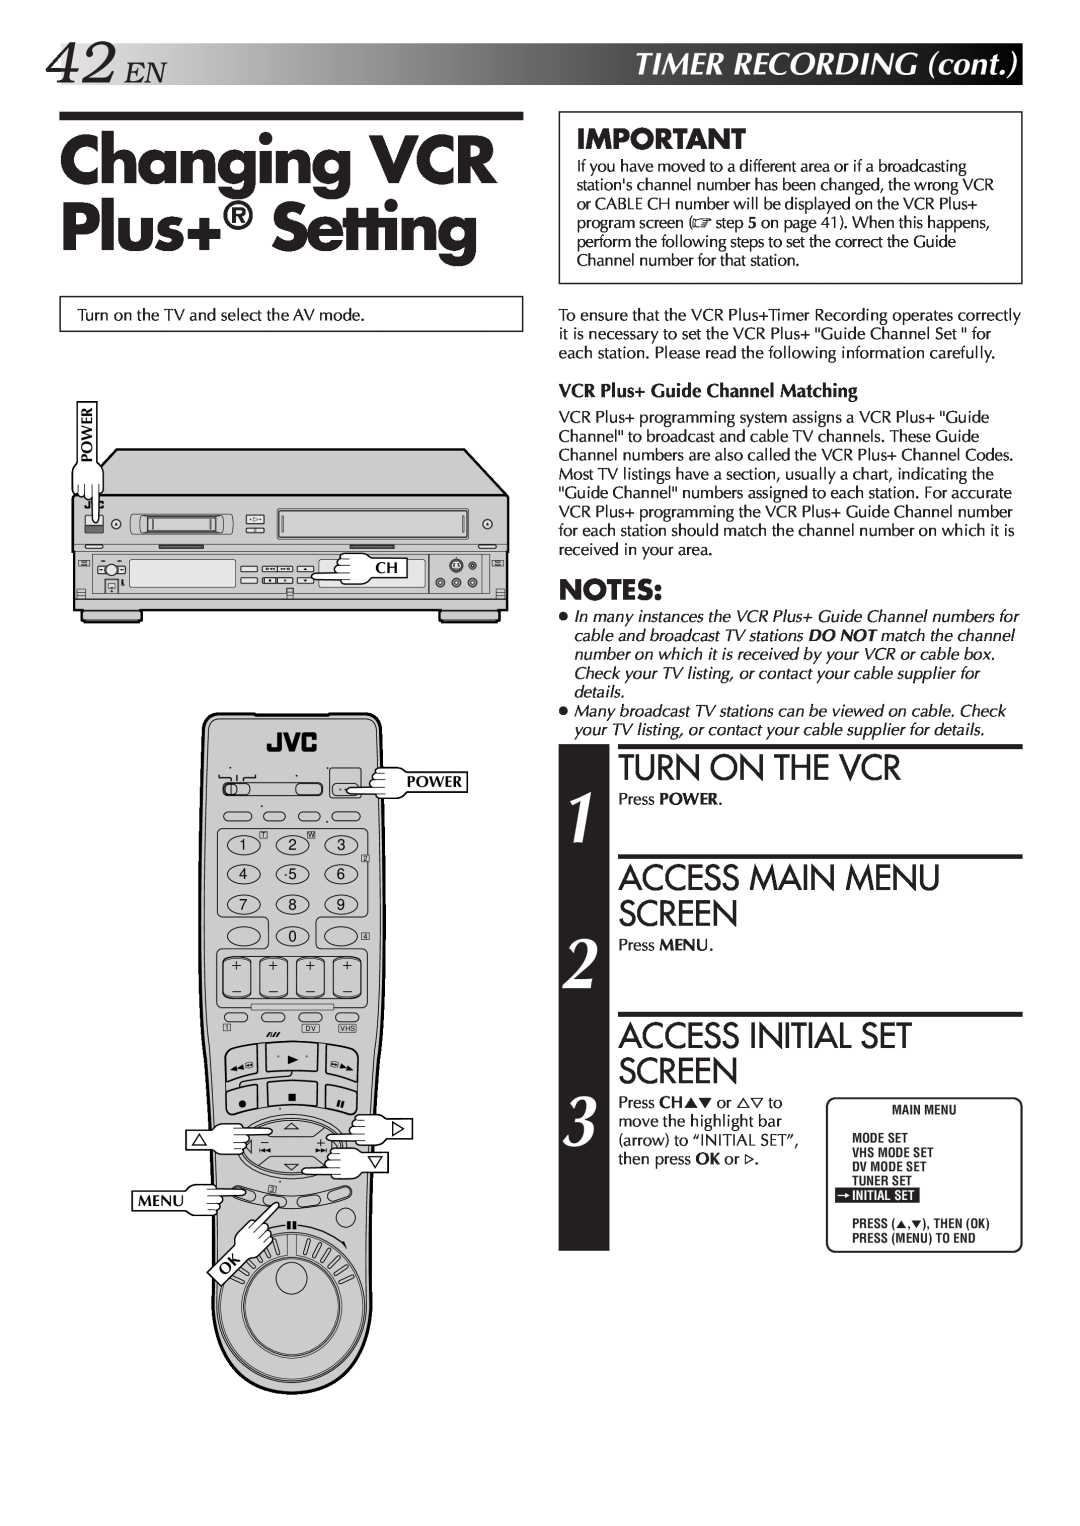 JVC SR-VS10U manual Changing VCR Plus+ Setting, 42ENTIMERRECORDINGcont, Turn On The Vcr, Access Main Menu, Screen, Notes 